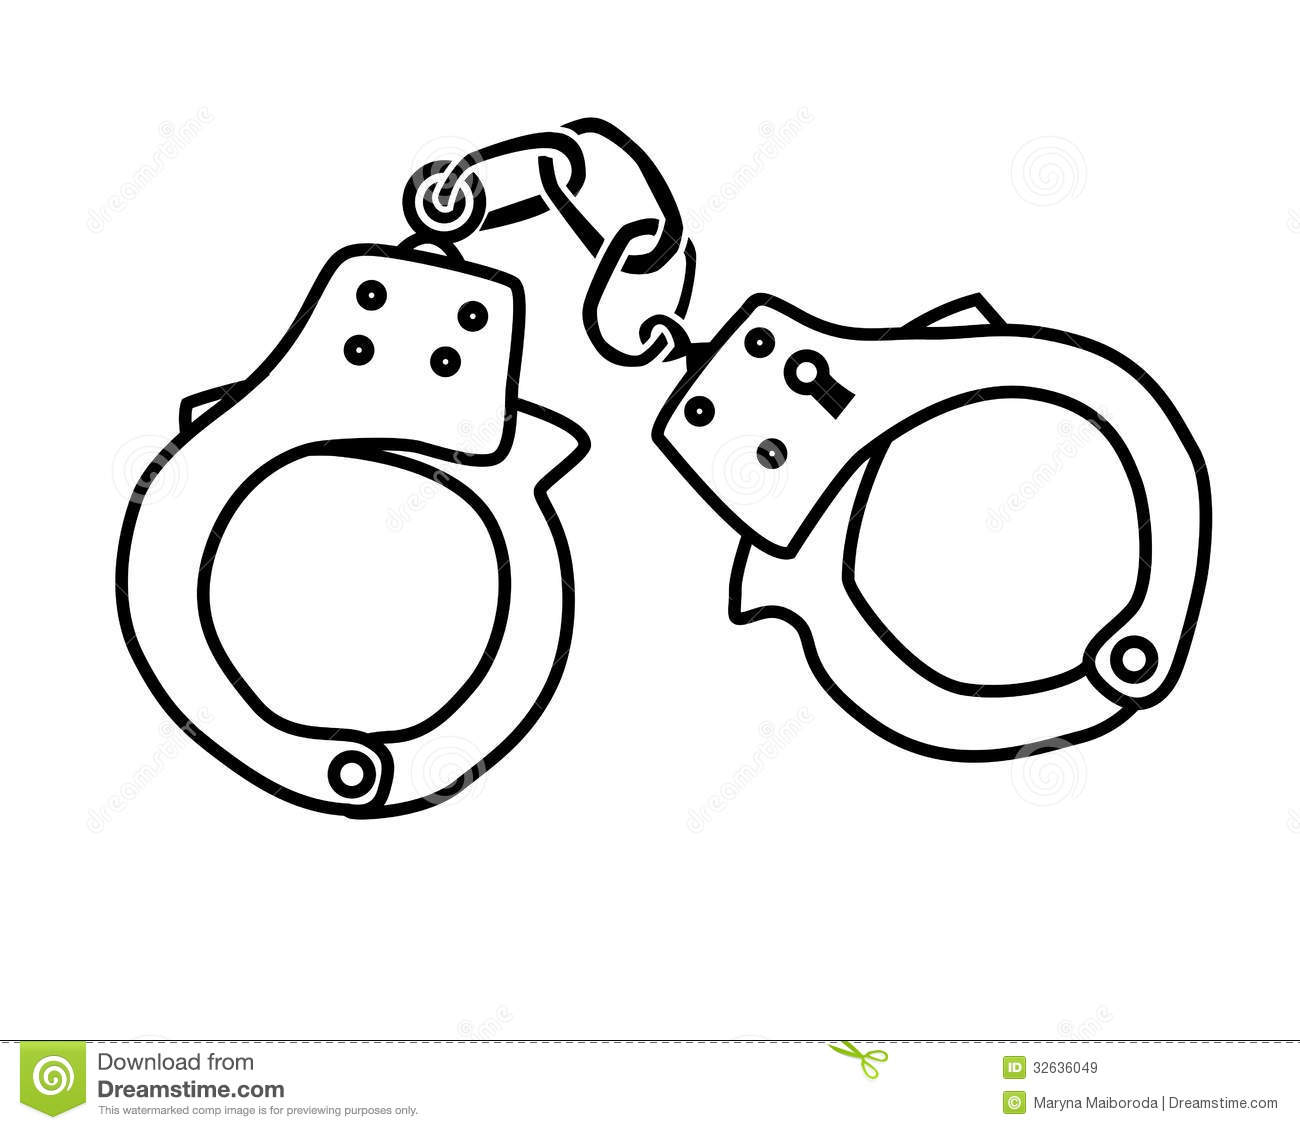 Handcuffs clipart black and white